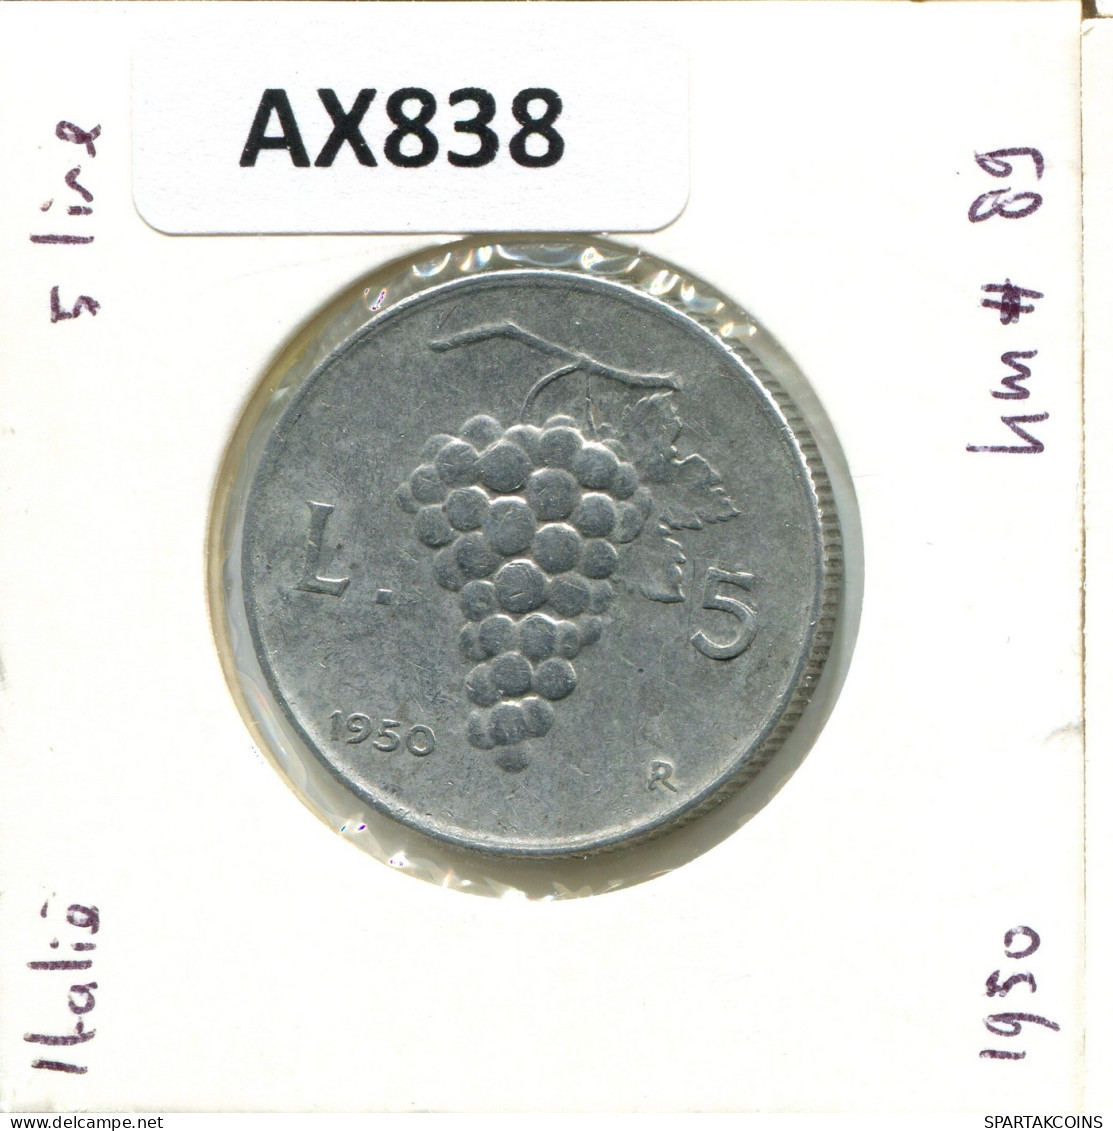 5 LIRE 1950 ITALY Coin #AX838.U.A - 5 Liras